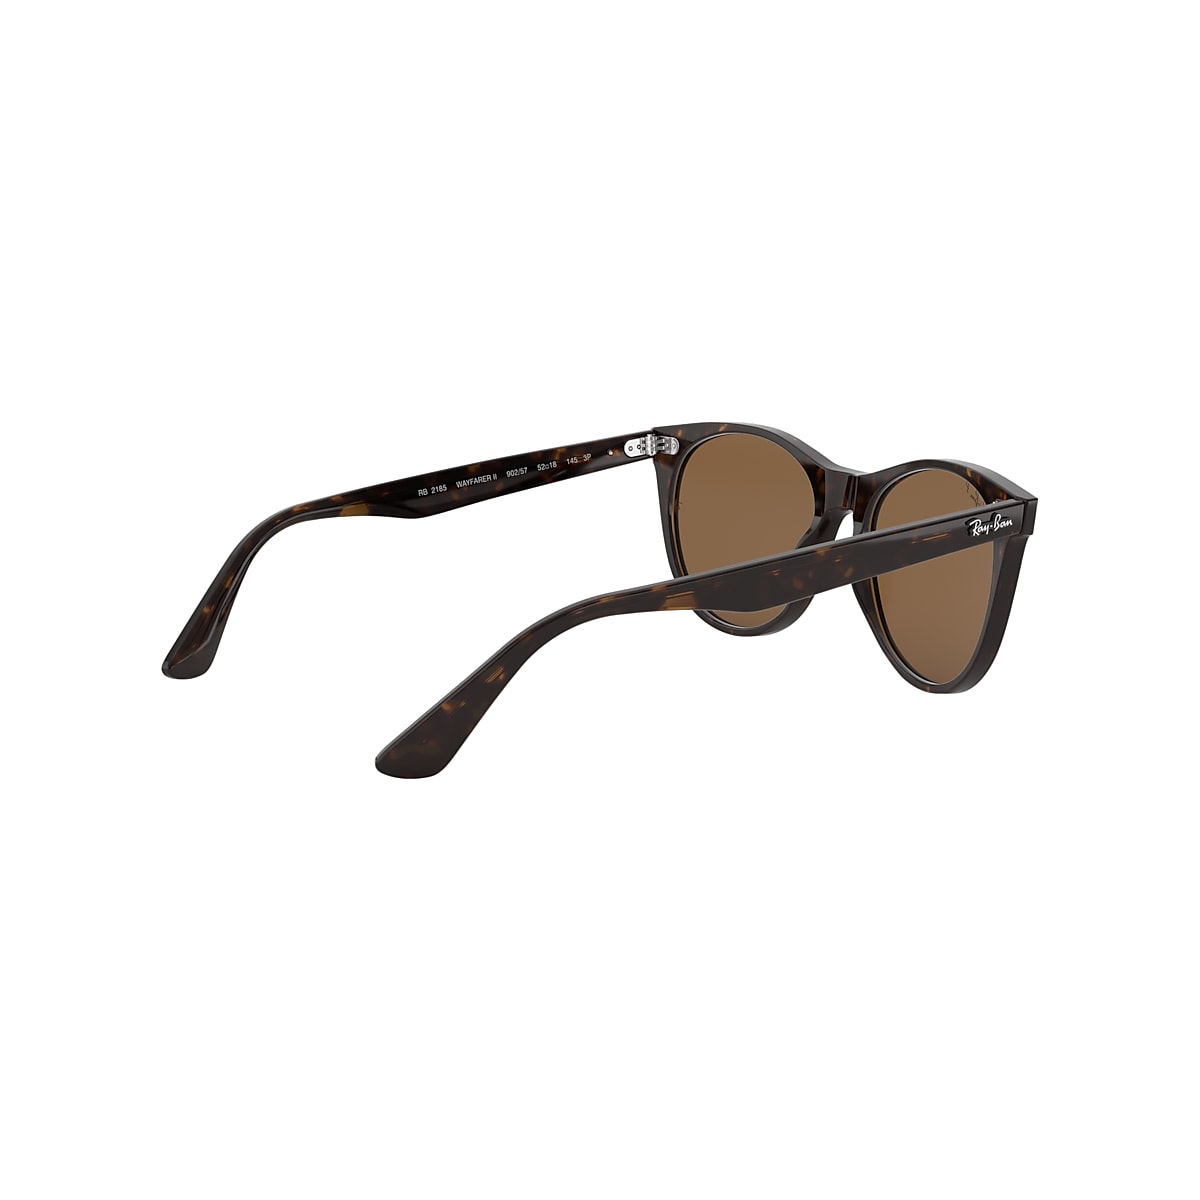 Wayfarer Ii Classic Sunglasses in Spotted Havana and Brown | Ray-Ban®